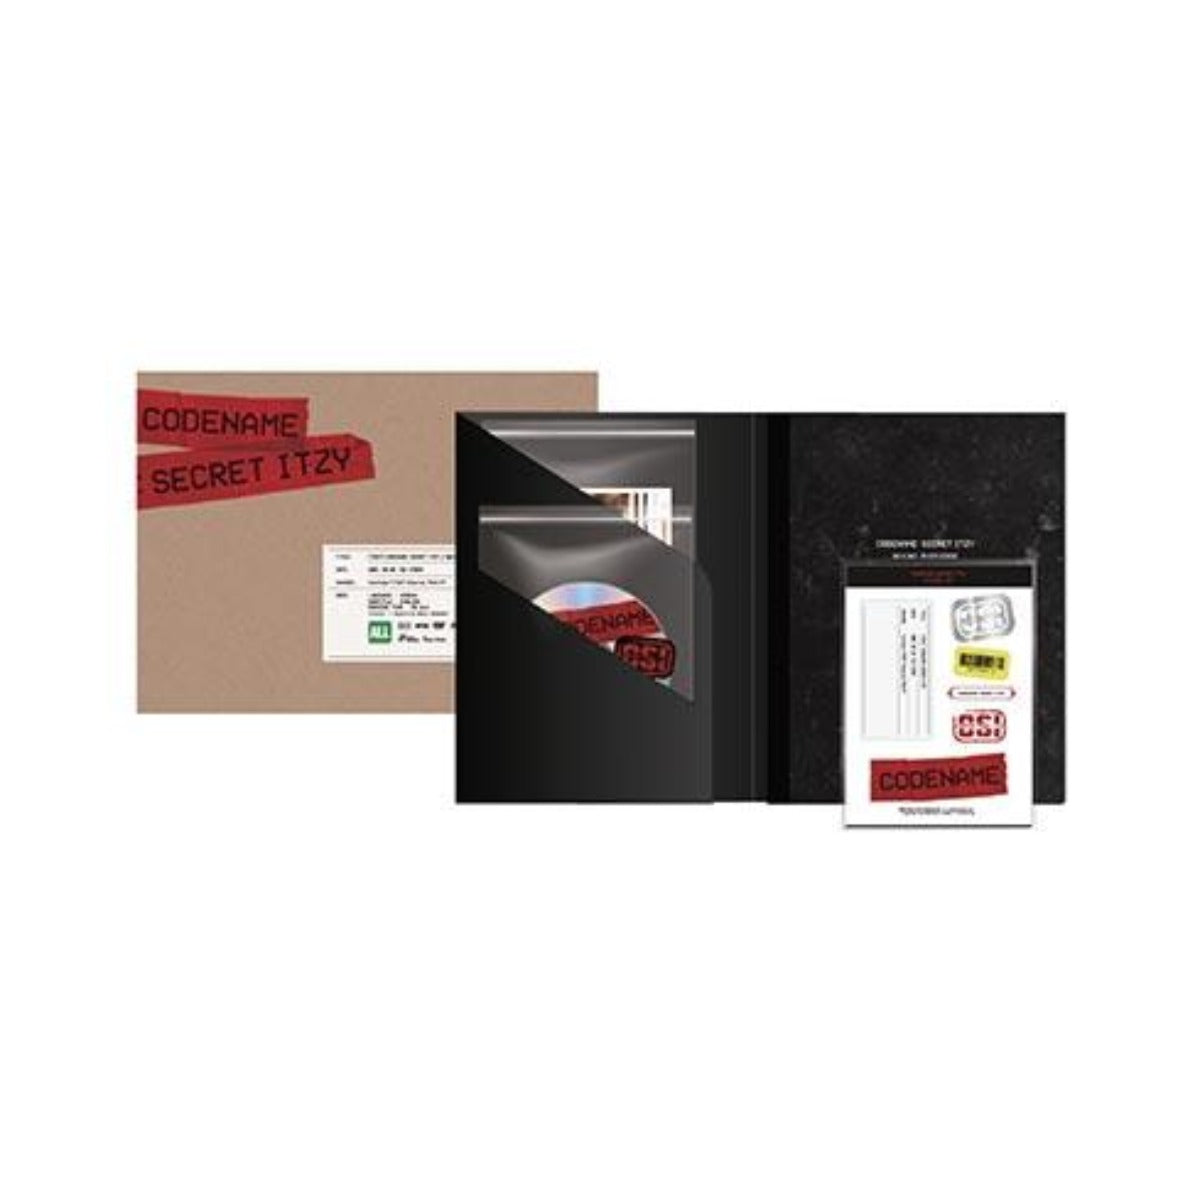 ITZY：Codename: Secret ITZY' Secret Store - Behind DVD Photobook Package